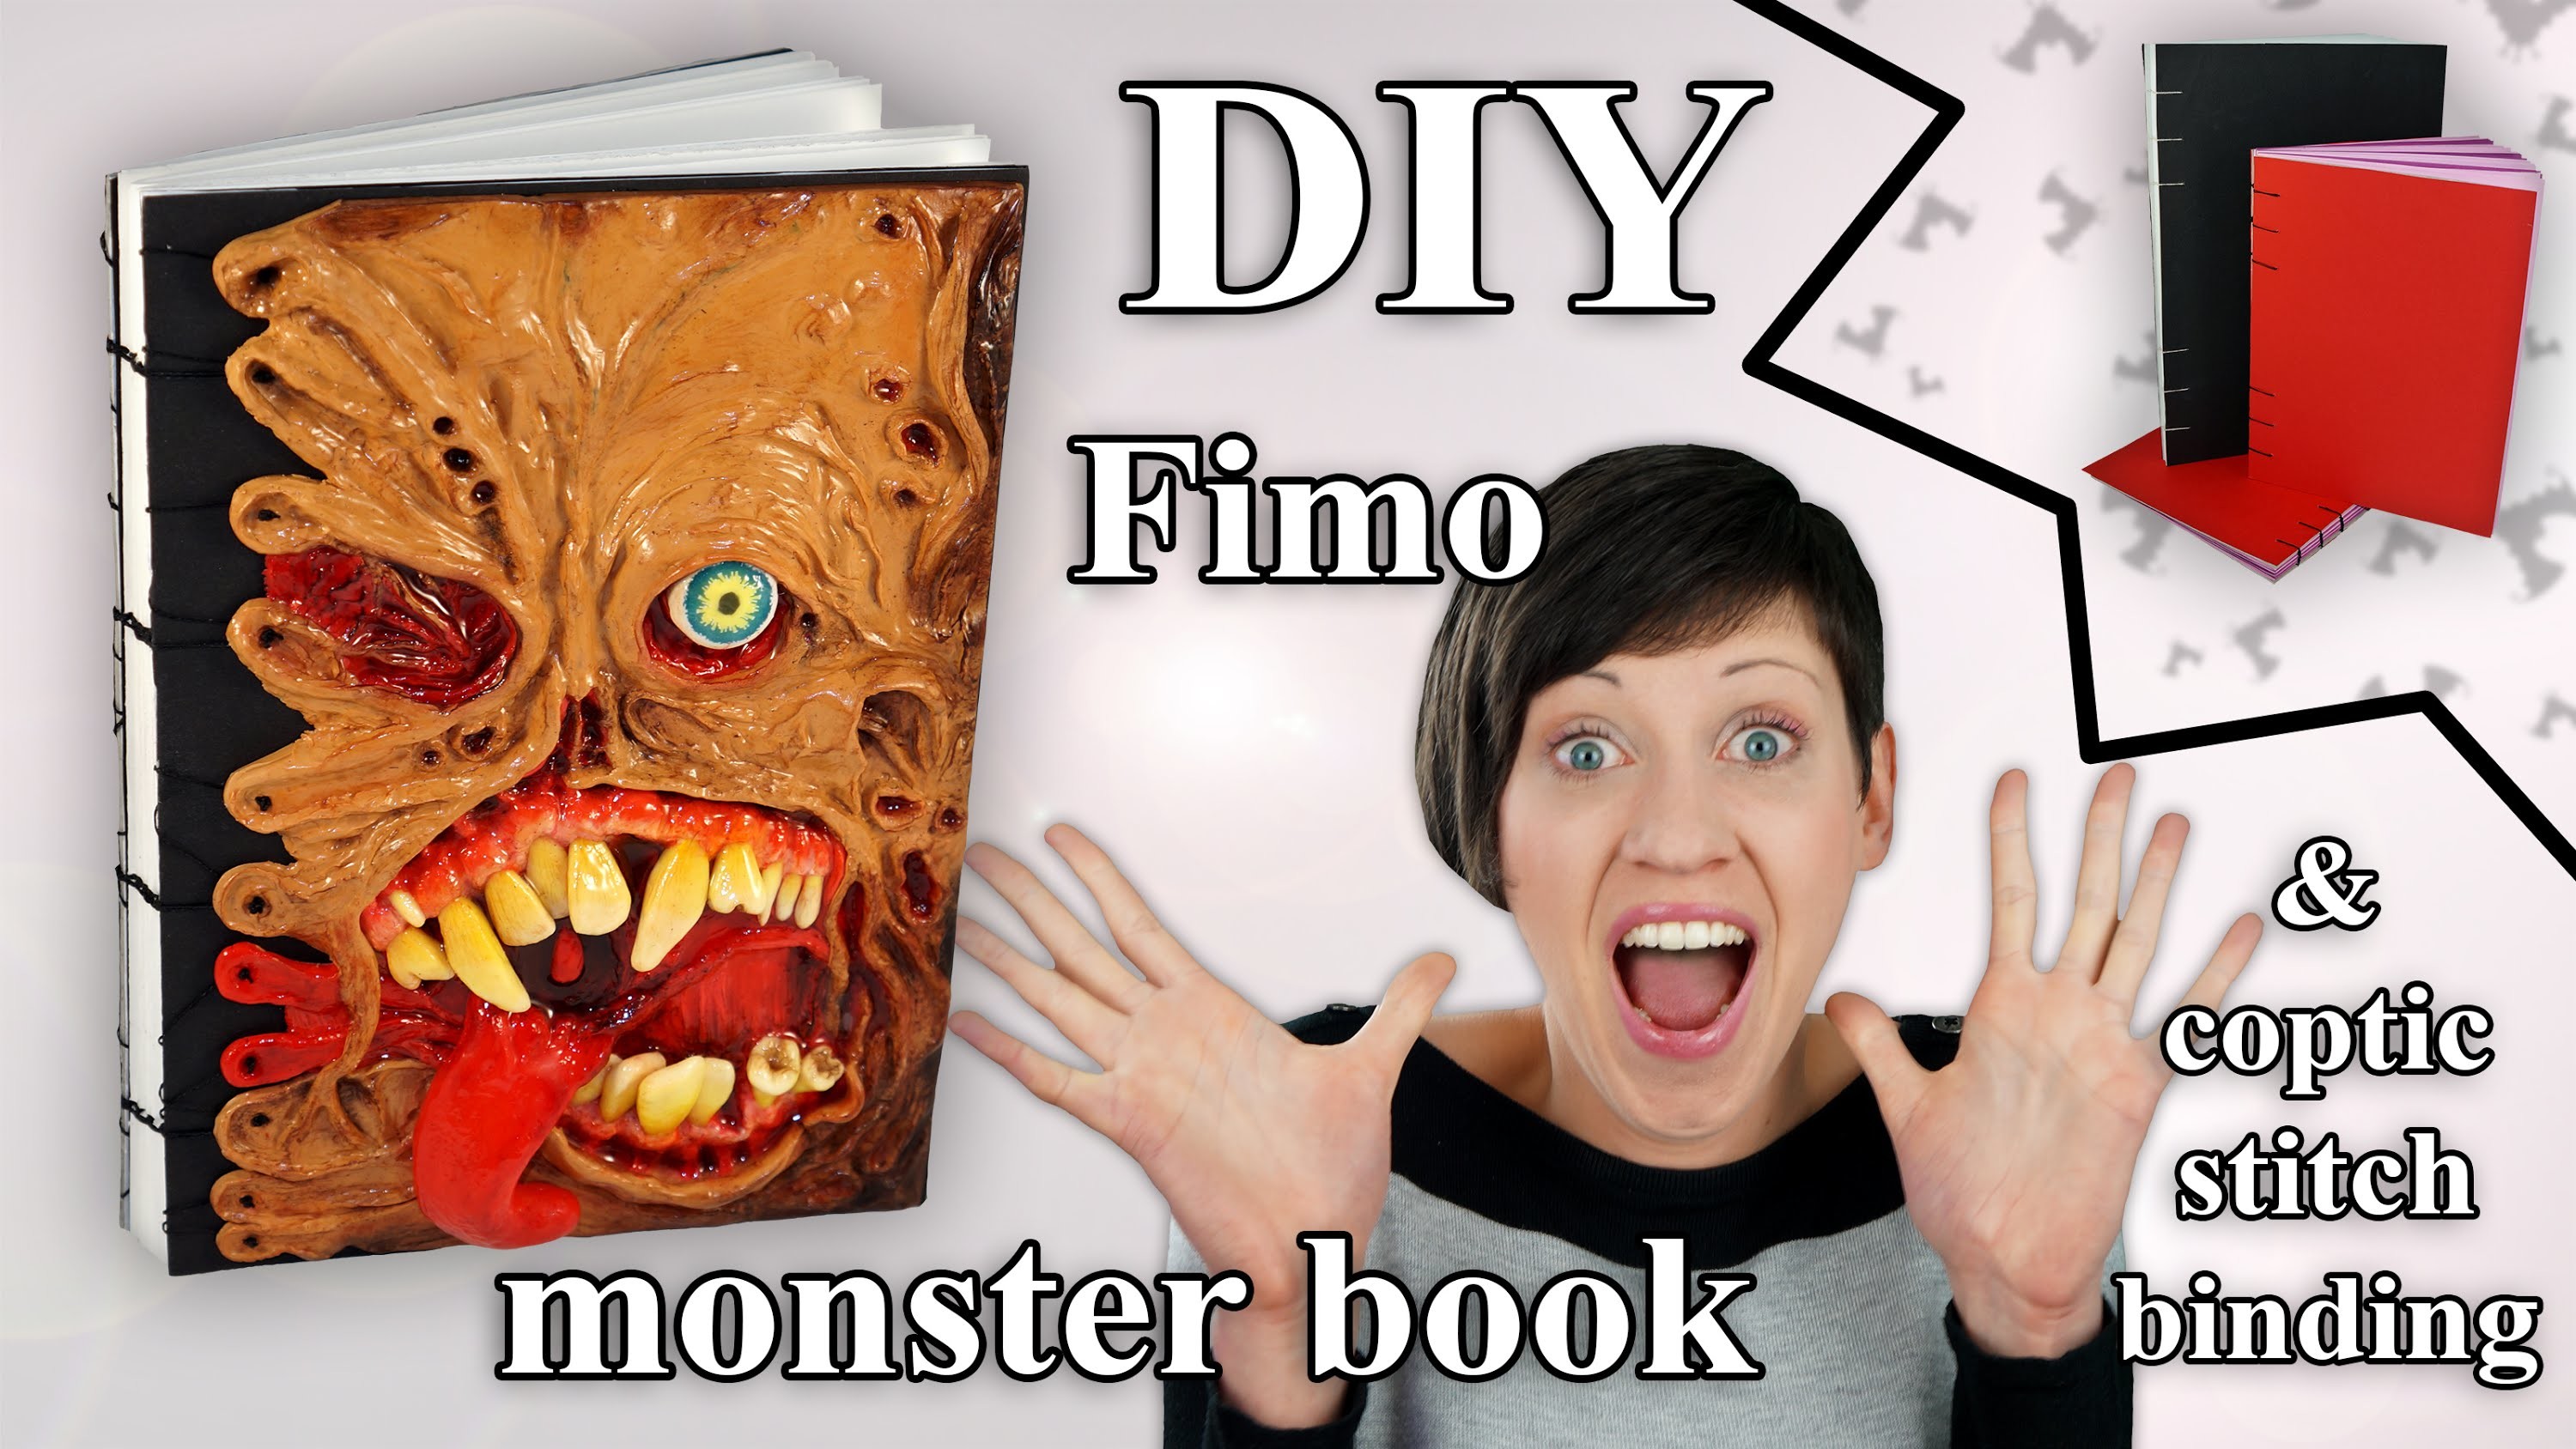 FIMO Buch (Monster): Polymer Mutant & Coptic Stitch Book - Tutorial [HD.DE] (EN-Sub)